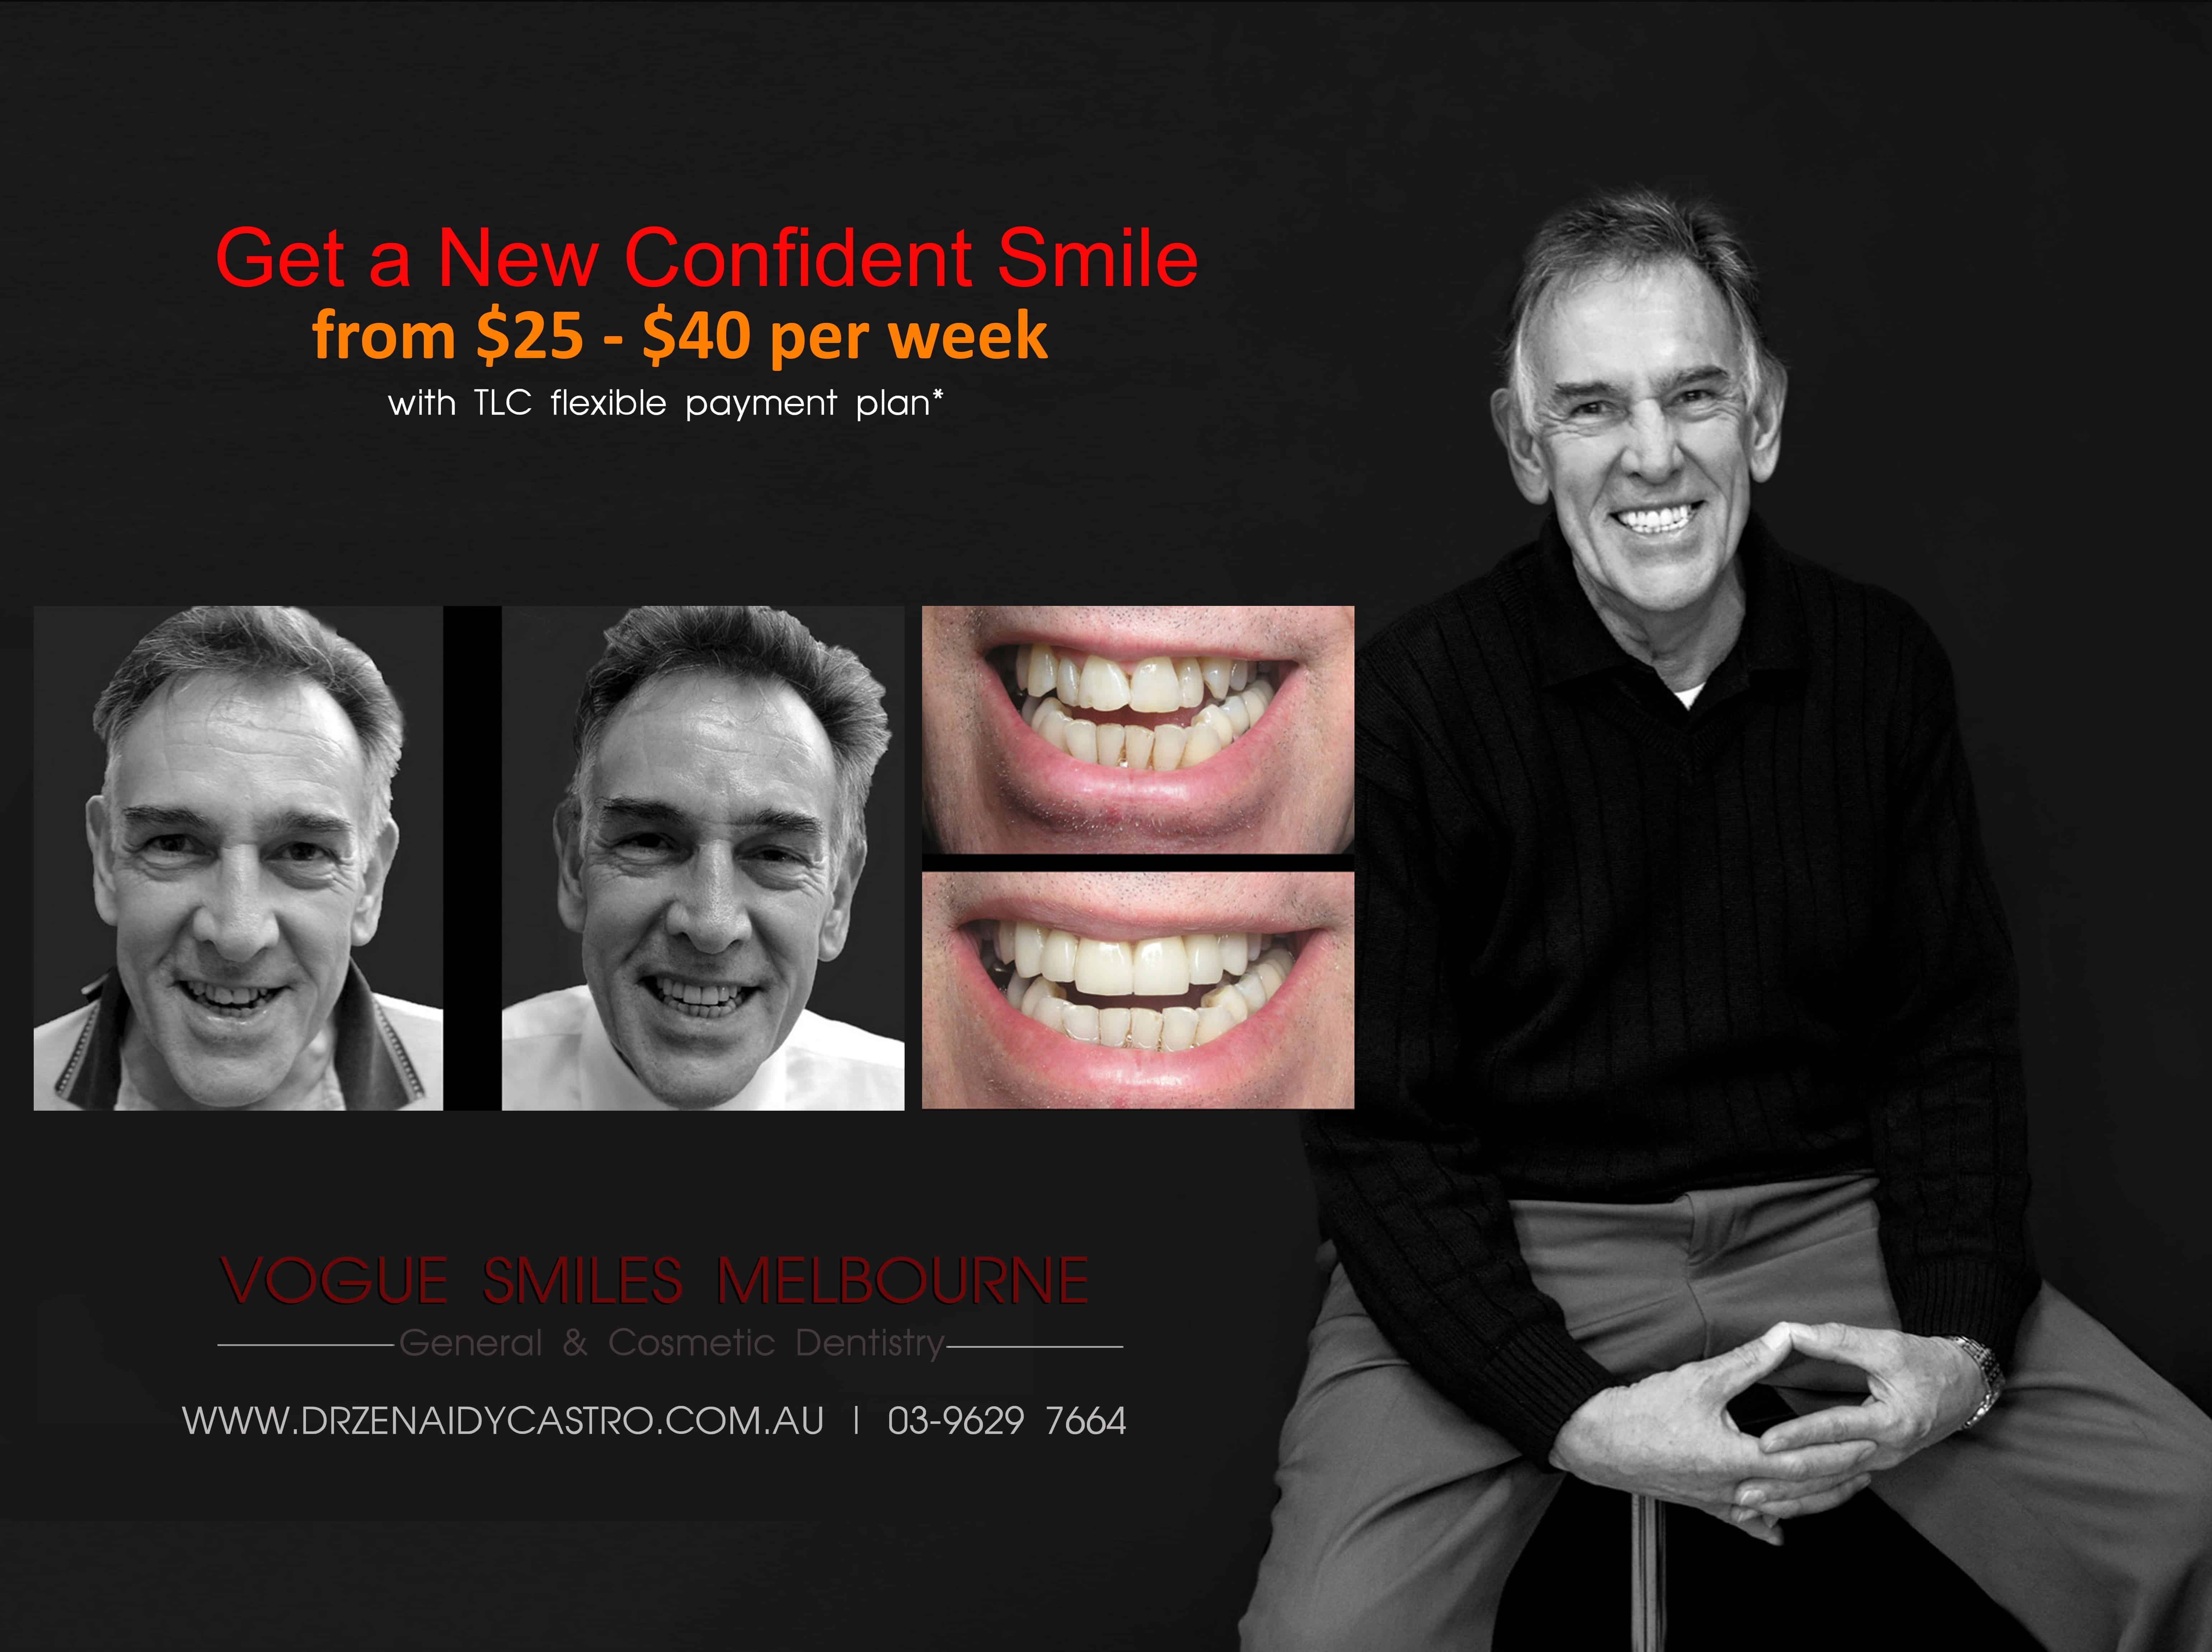 Non-surgical facelift procedure with Dental Veneers Melbourne CBD -Anti-aging expert Melbourne CBD, Non-Surgical & Minimally Invasive Facial and Smile Rejuvenation Melbourne